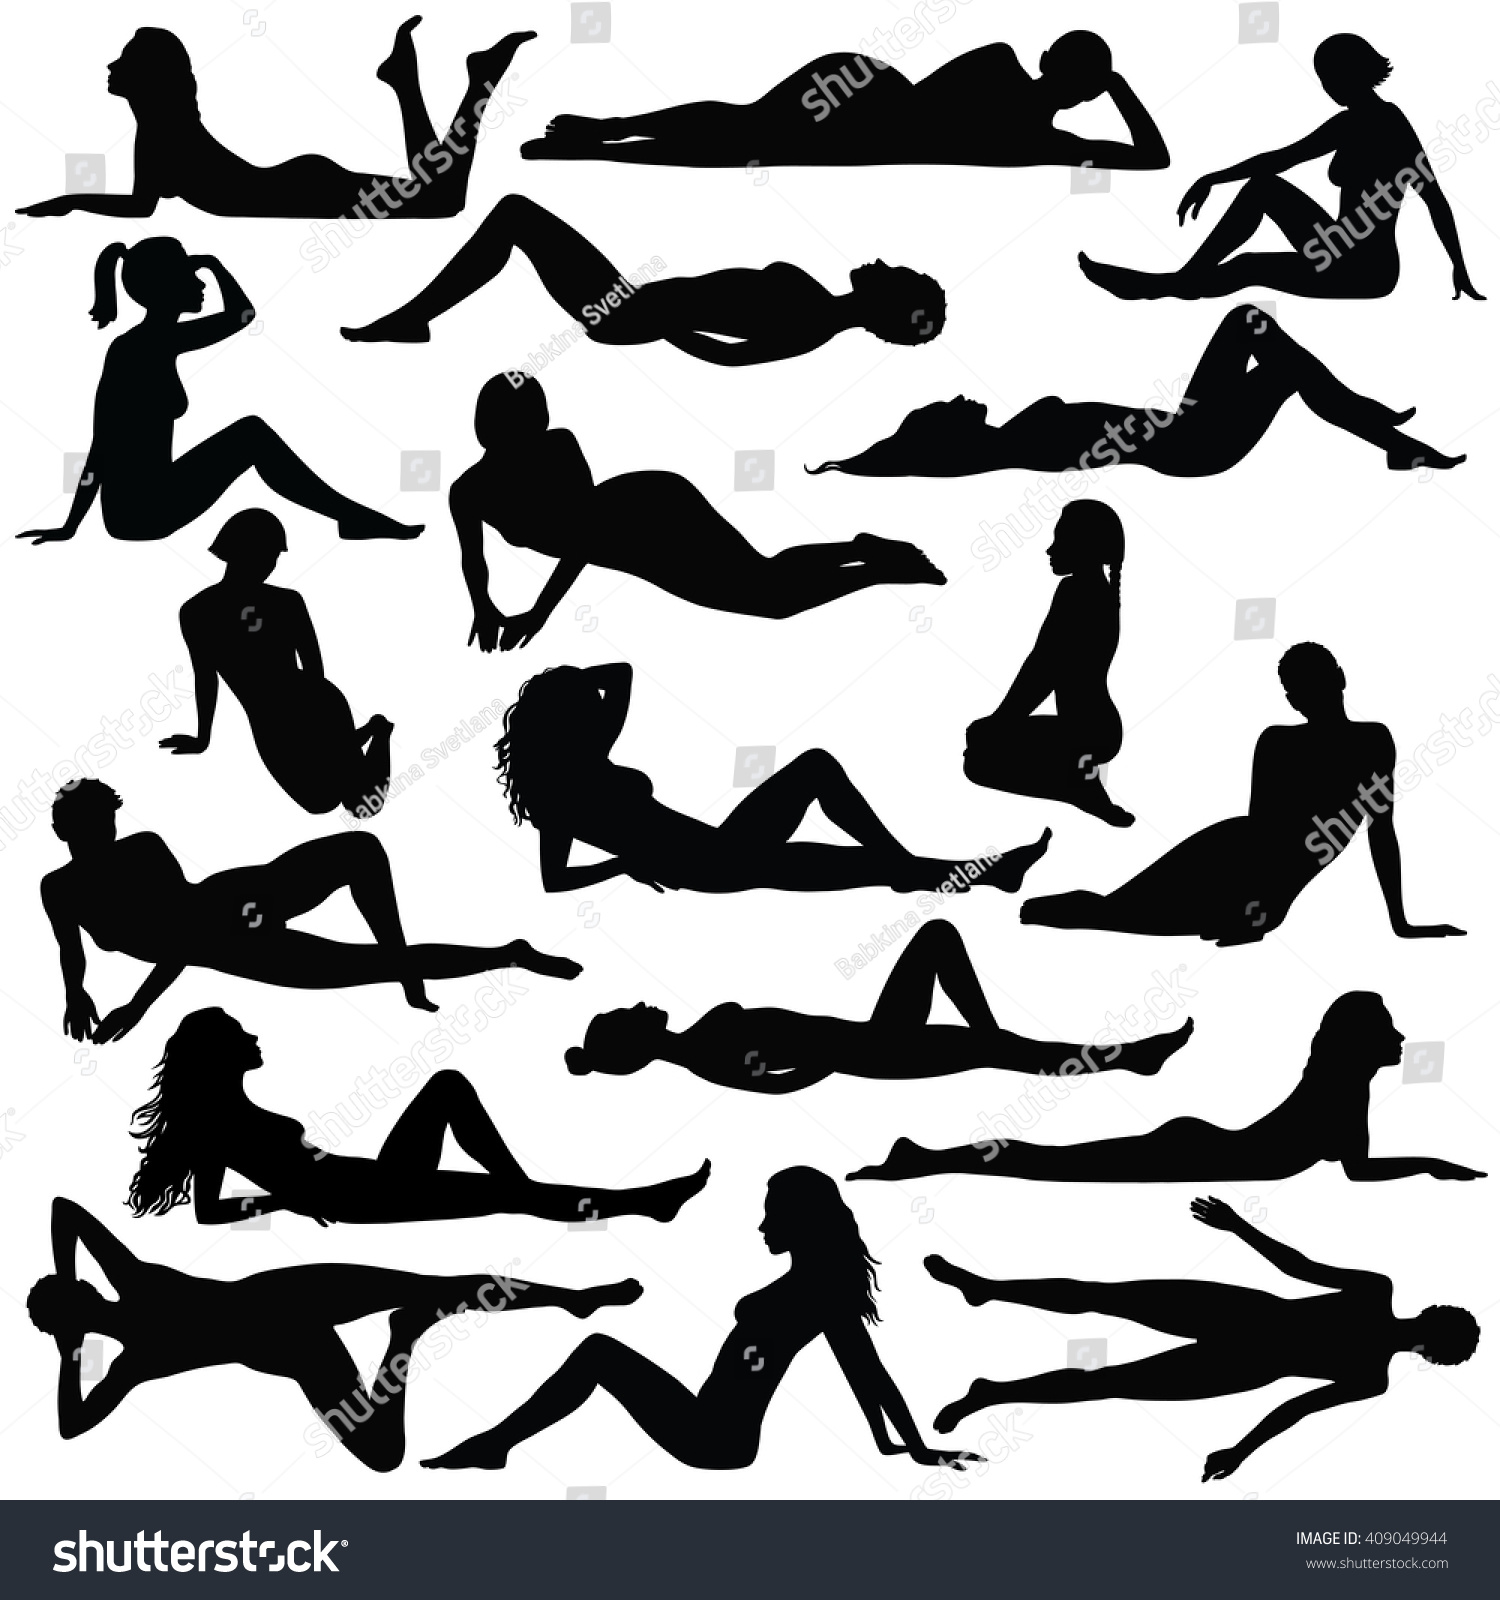 206 Sexy Erotic Female Sitting Position 이미지 스톡 사진 및 벡터 Shutterstock 3746